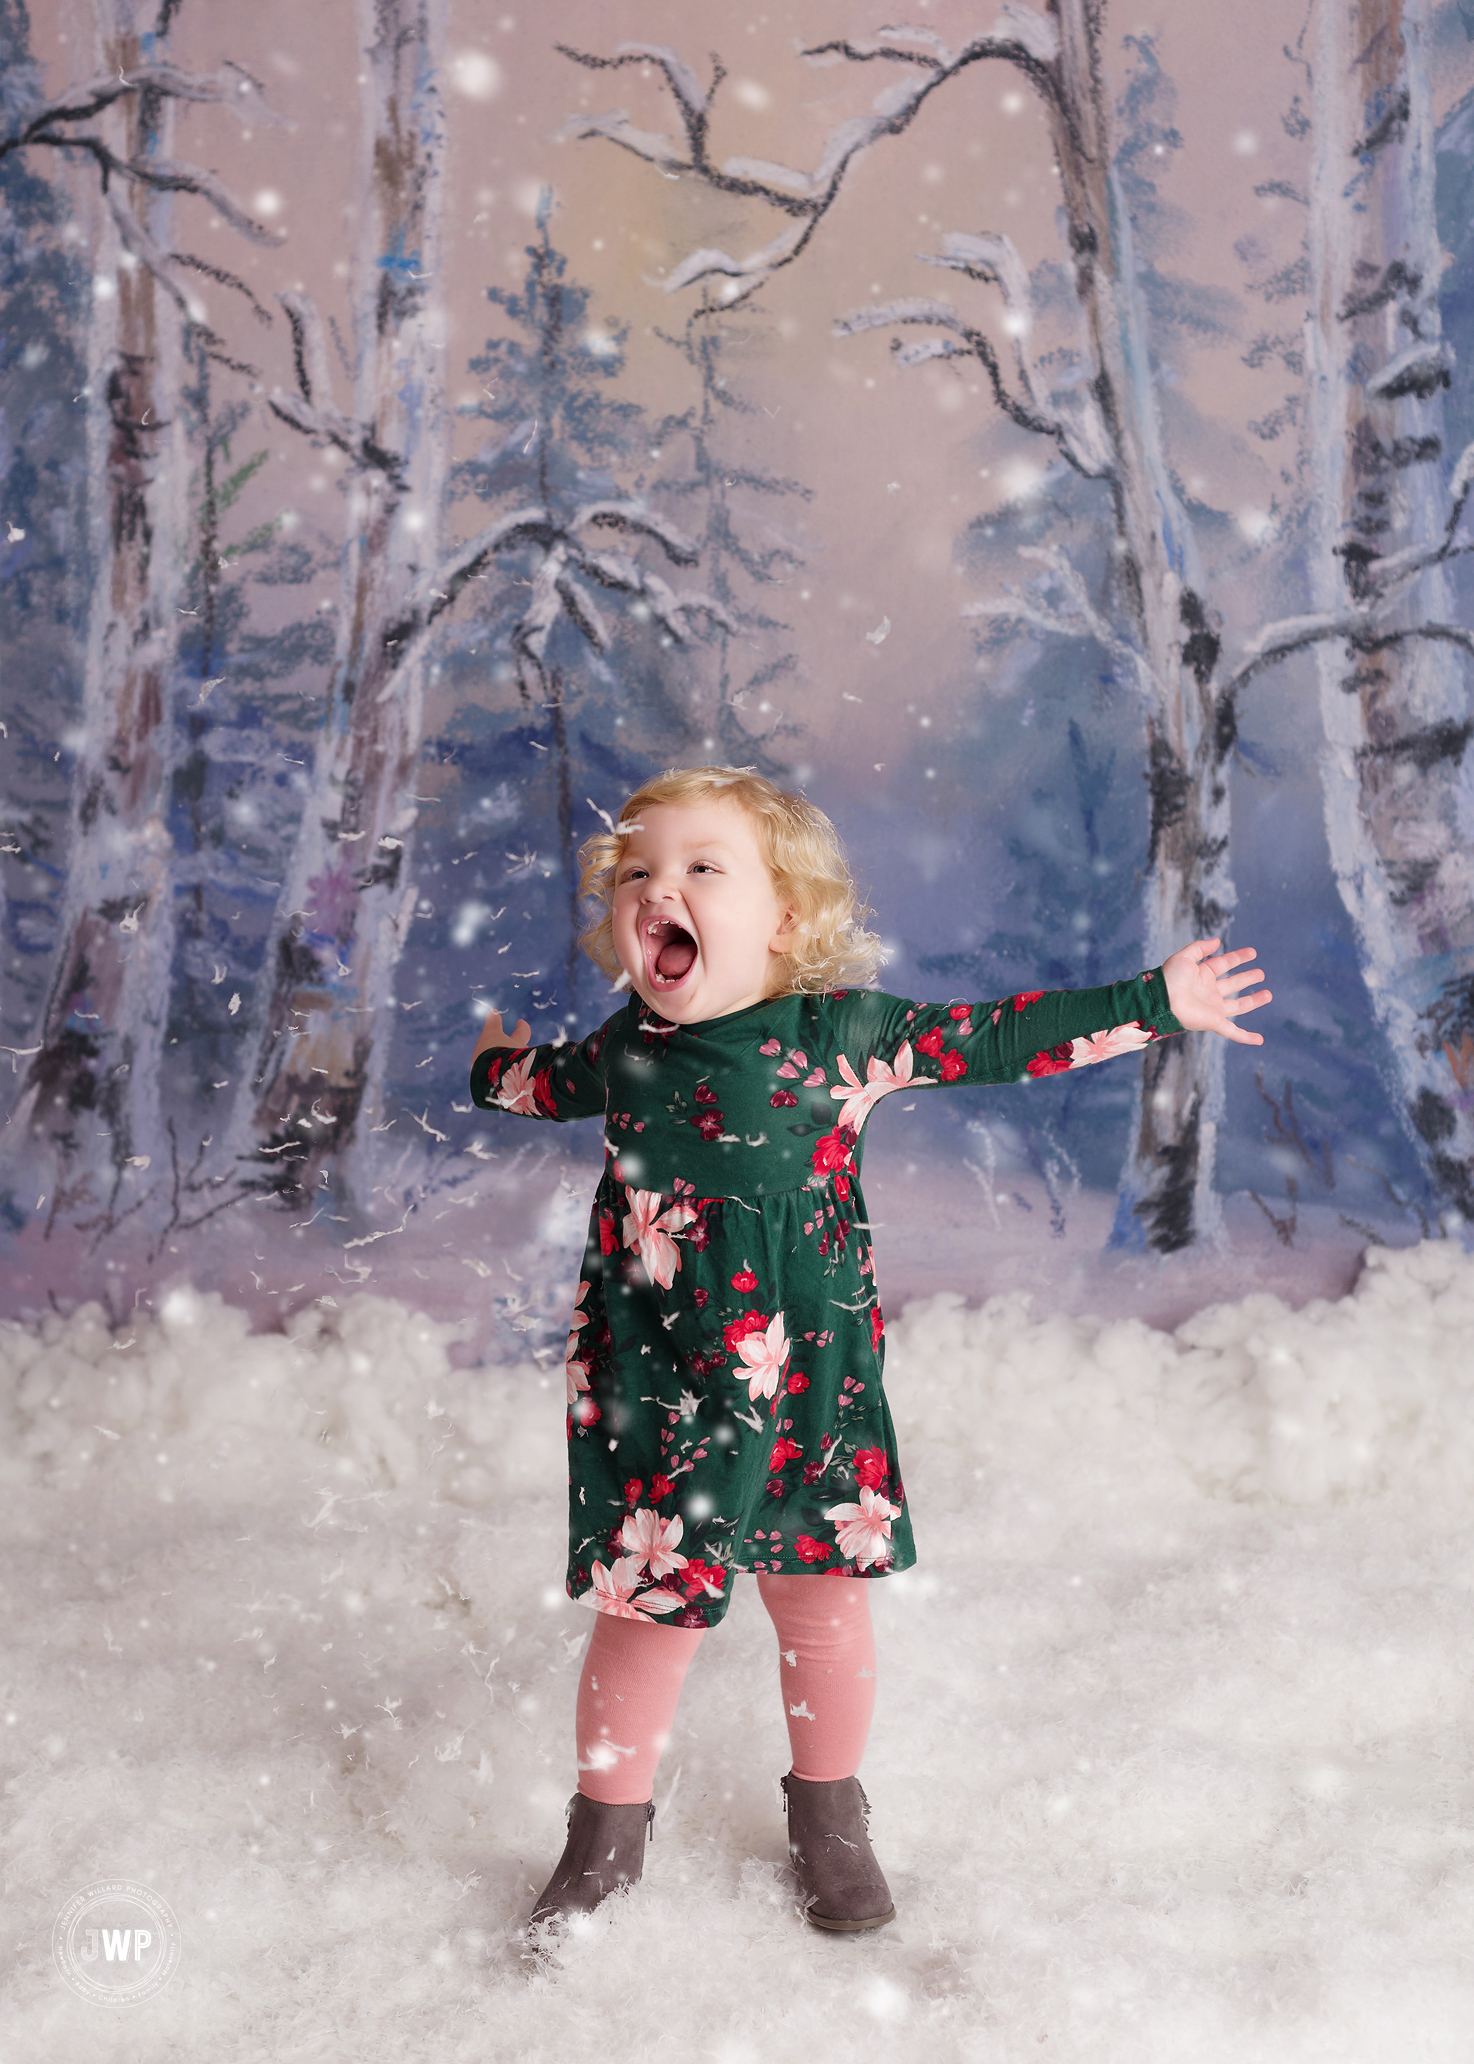 little girl throwing snow Winter scene Kingston mini session photography